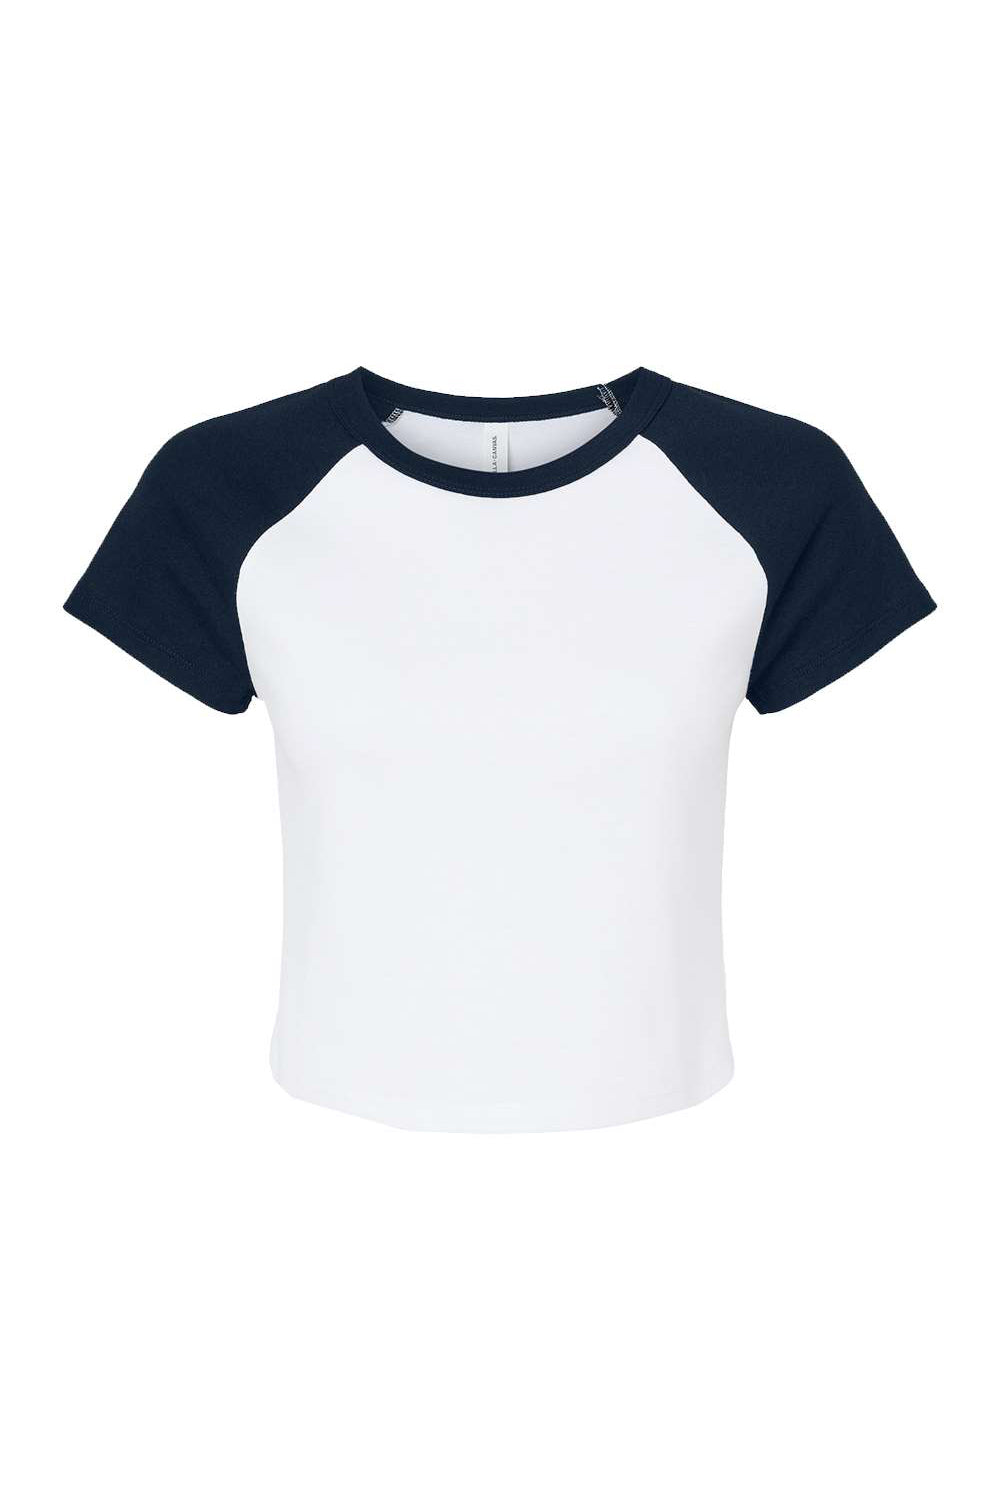 Bella + Canvas 1201 Womens Micro Ribbed Raglan Short Sleeve Crewneck Baby T-Shirt White/Navy Blue Flat Front